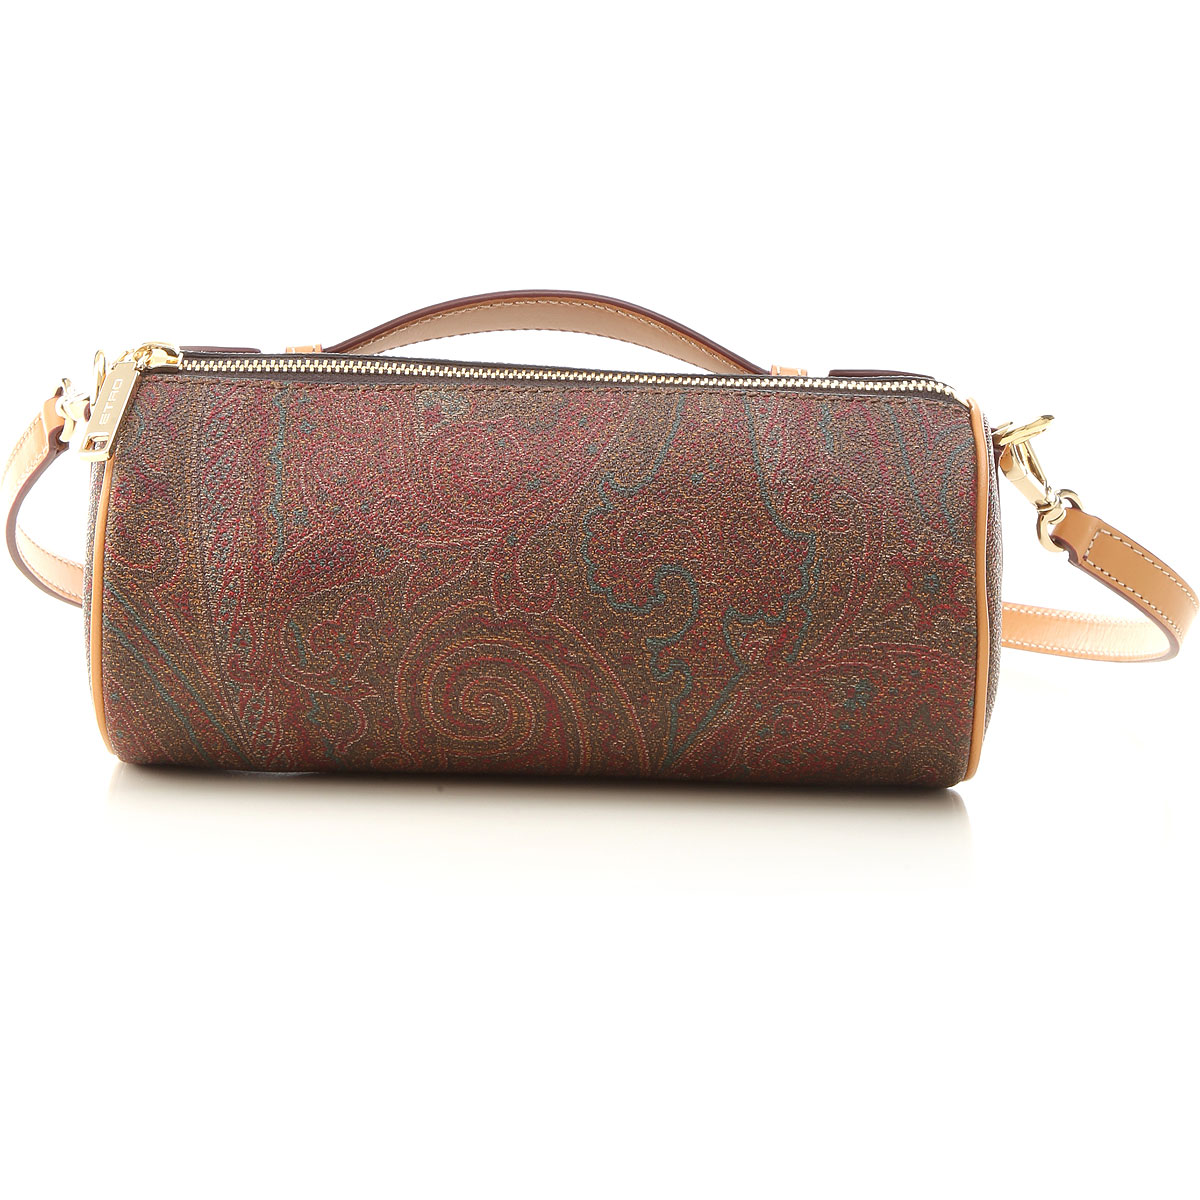 Handbags Etro, Style code: 0n032-8010-600